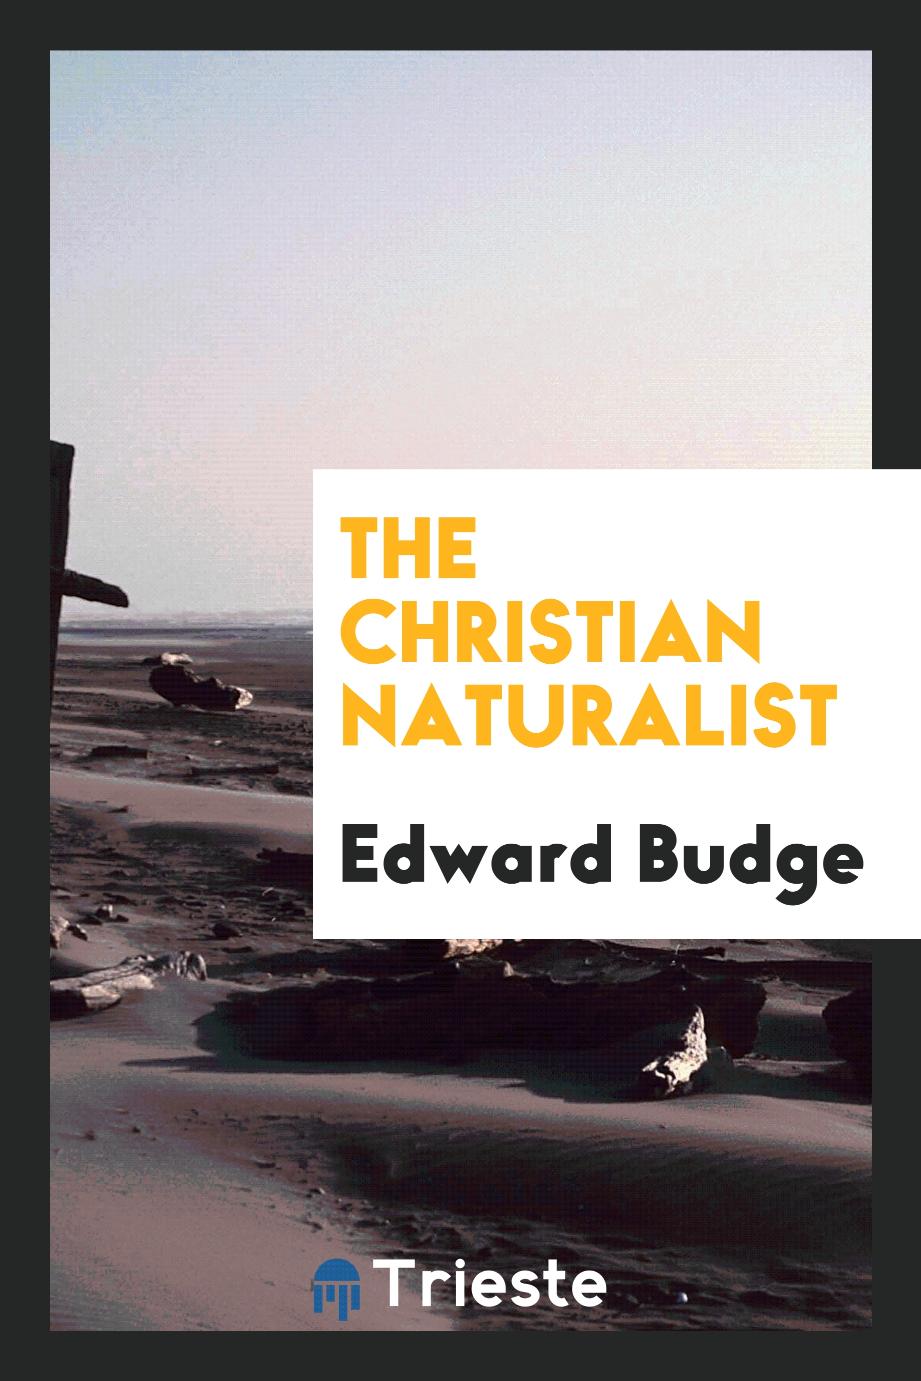 The Christian naturalist